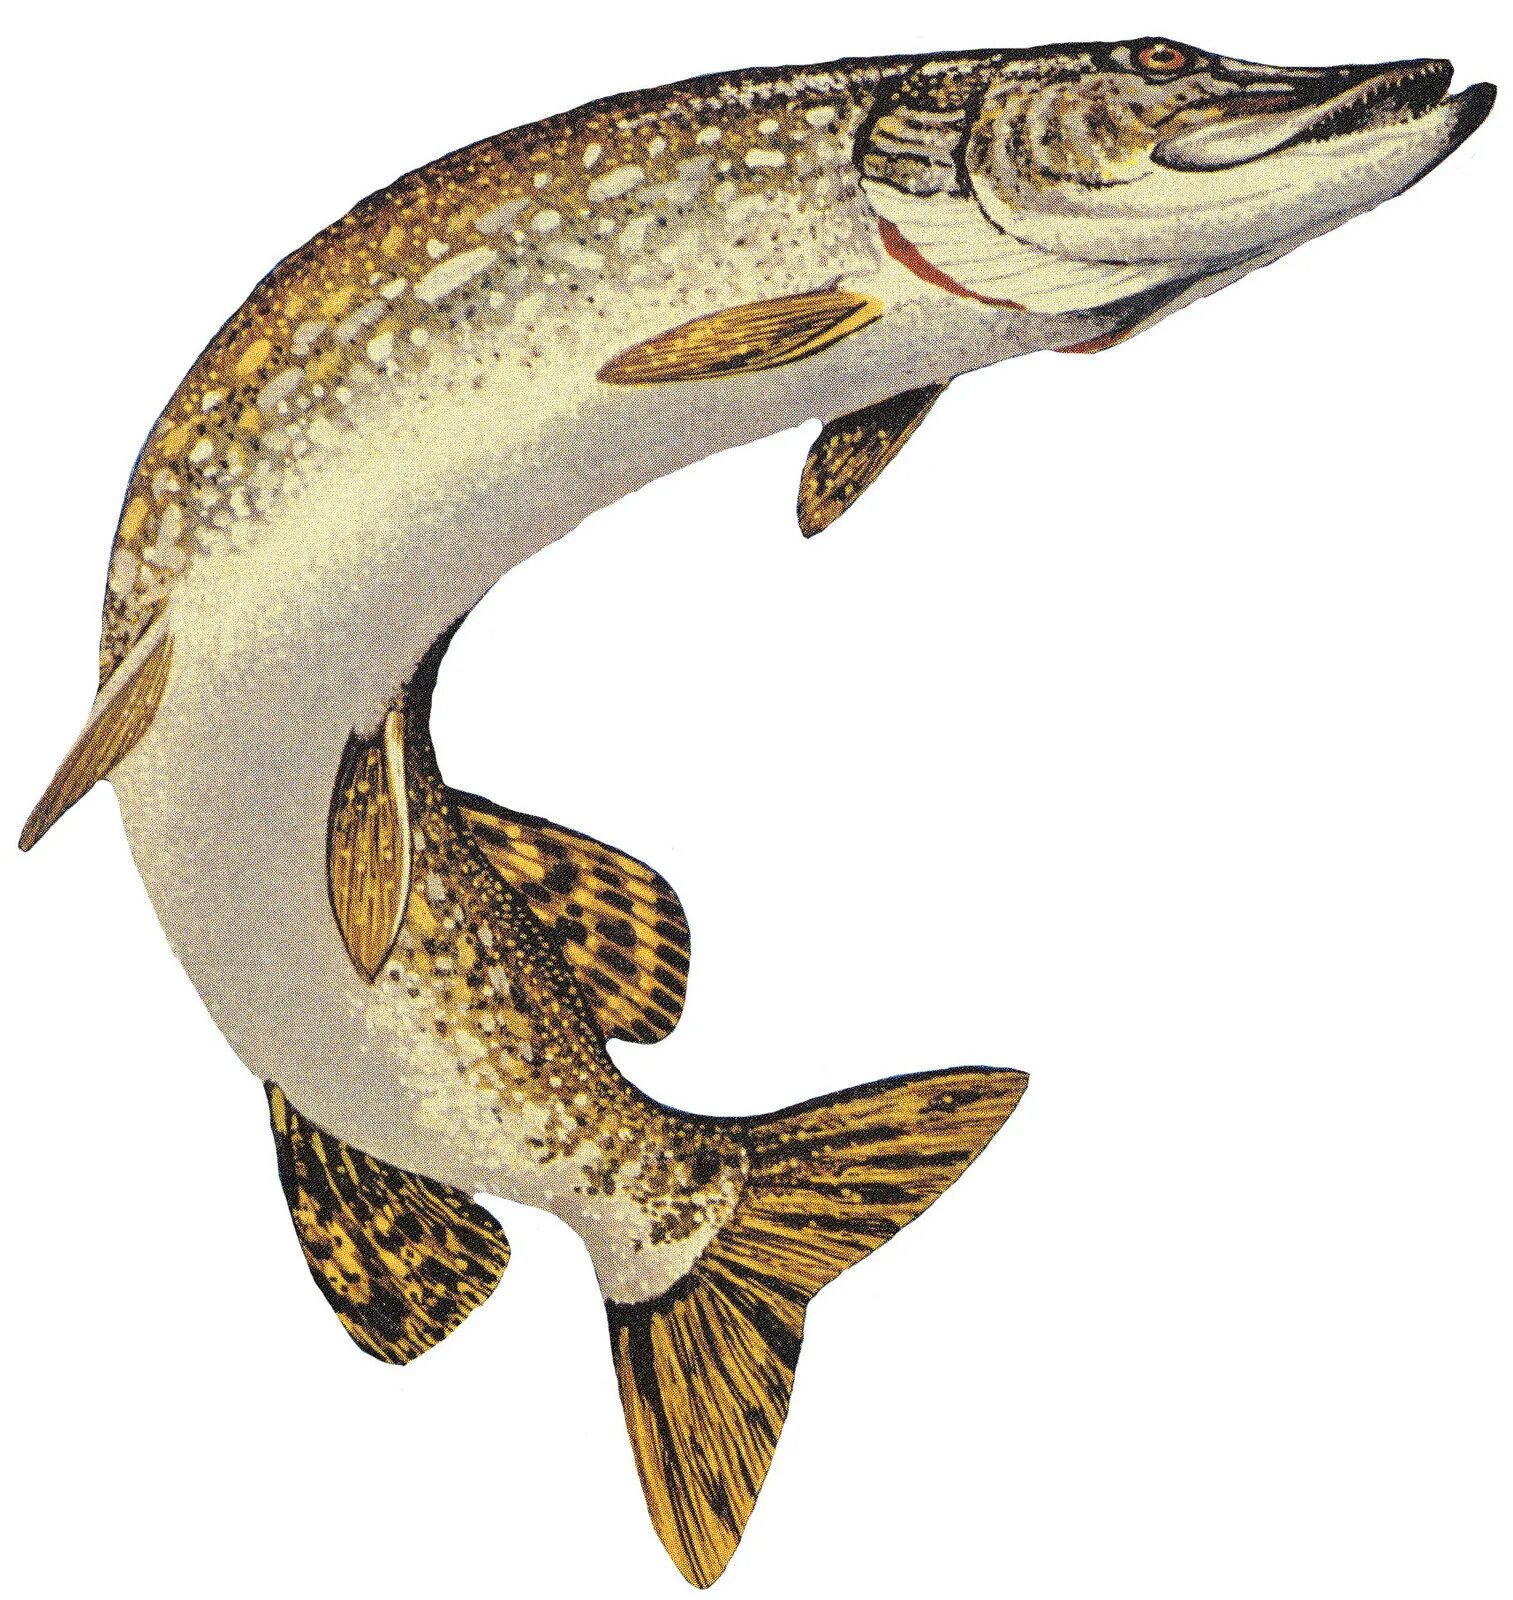 Щука обыкновенная рисунок. Esox kronneri. Речные рыбы щука. Esox Lucius — обыкновенная щука систематика. Northern Pike рыба.